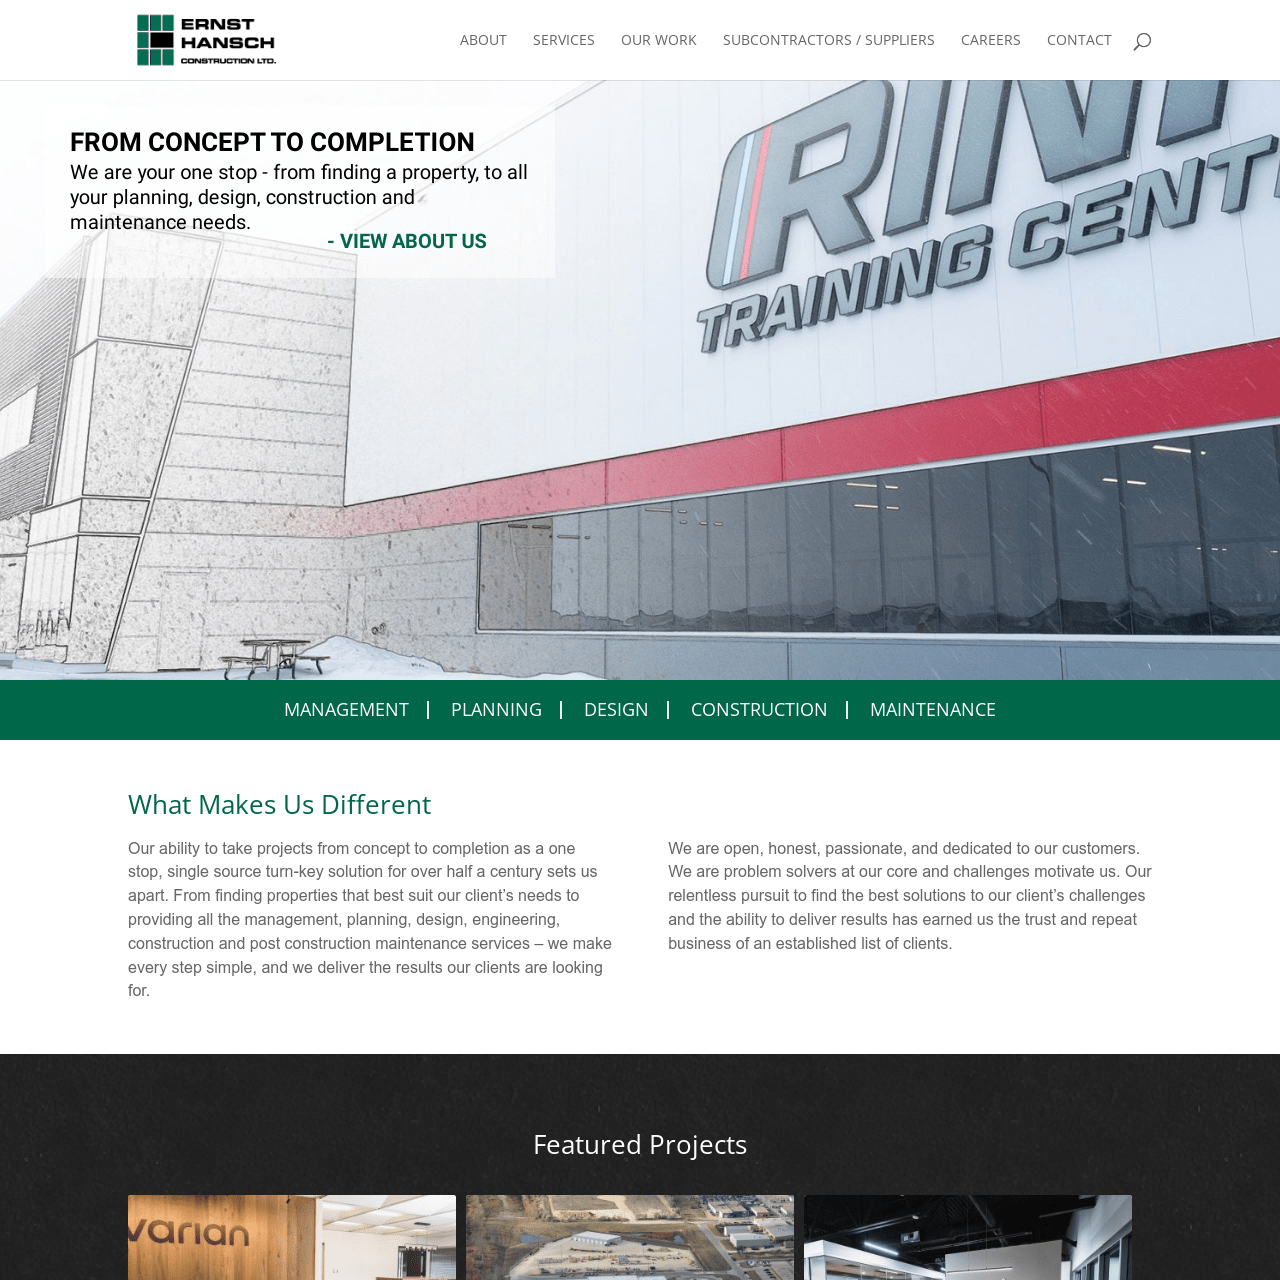 Ernst Hansch Construction website designed by 6P Marketing